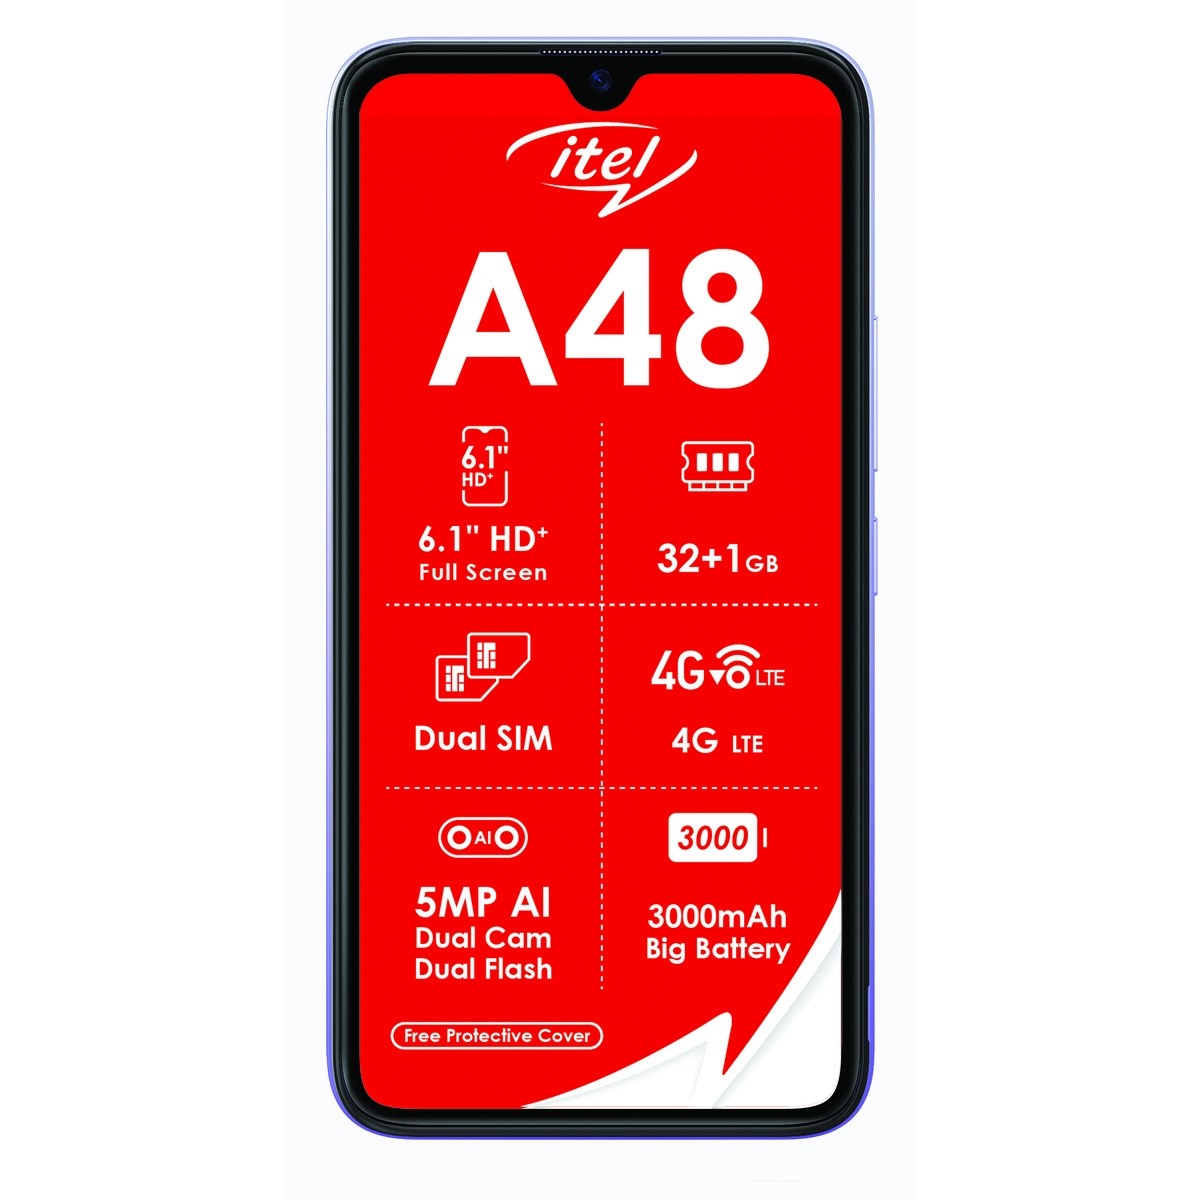 iTel A48 (Vodacom)